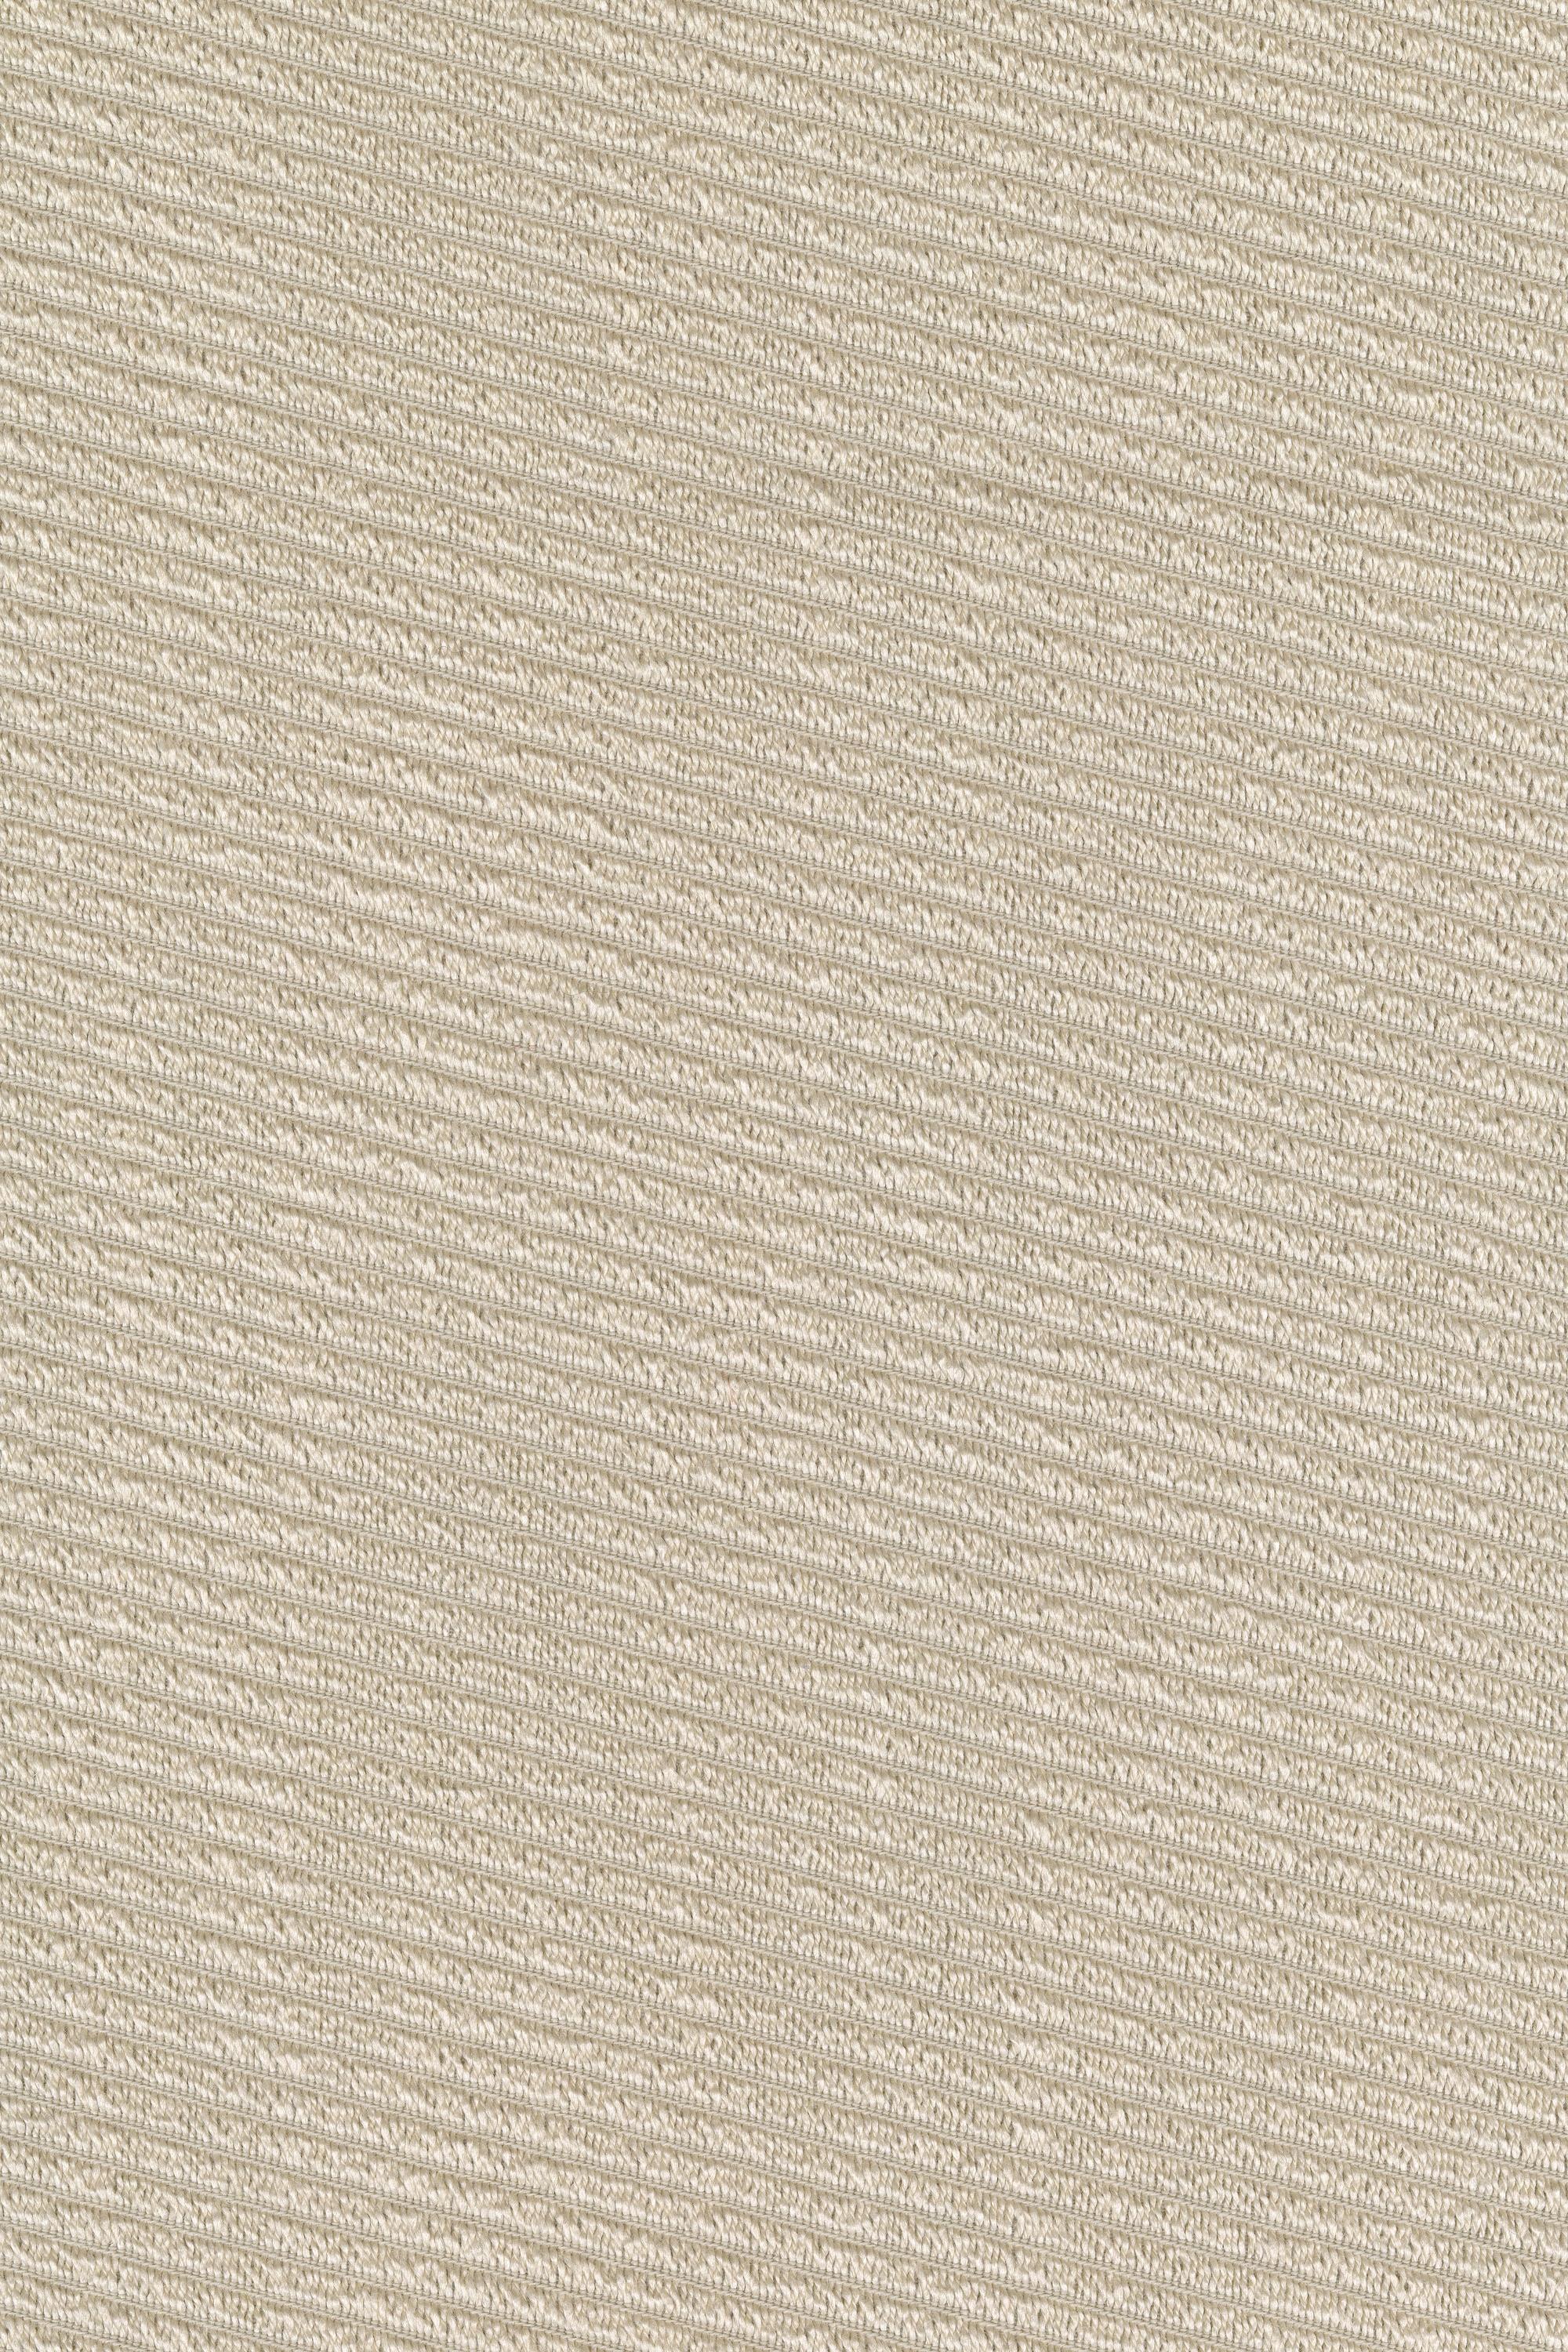 Kvadrat Aaren Upholstery Fabric 0233 by Raf Simons